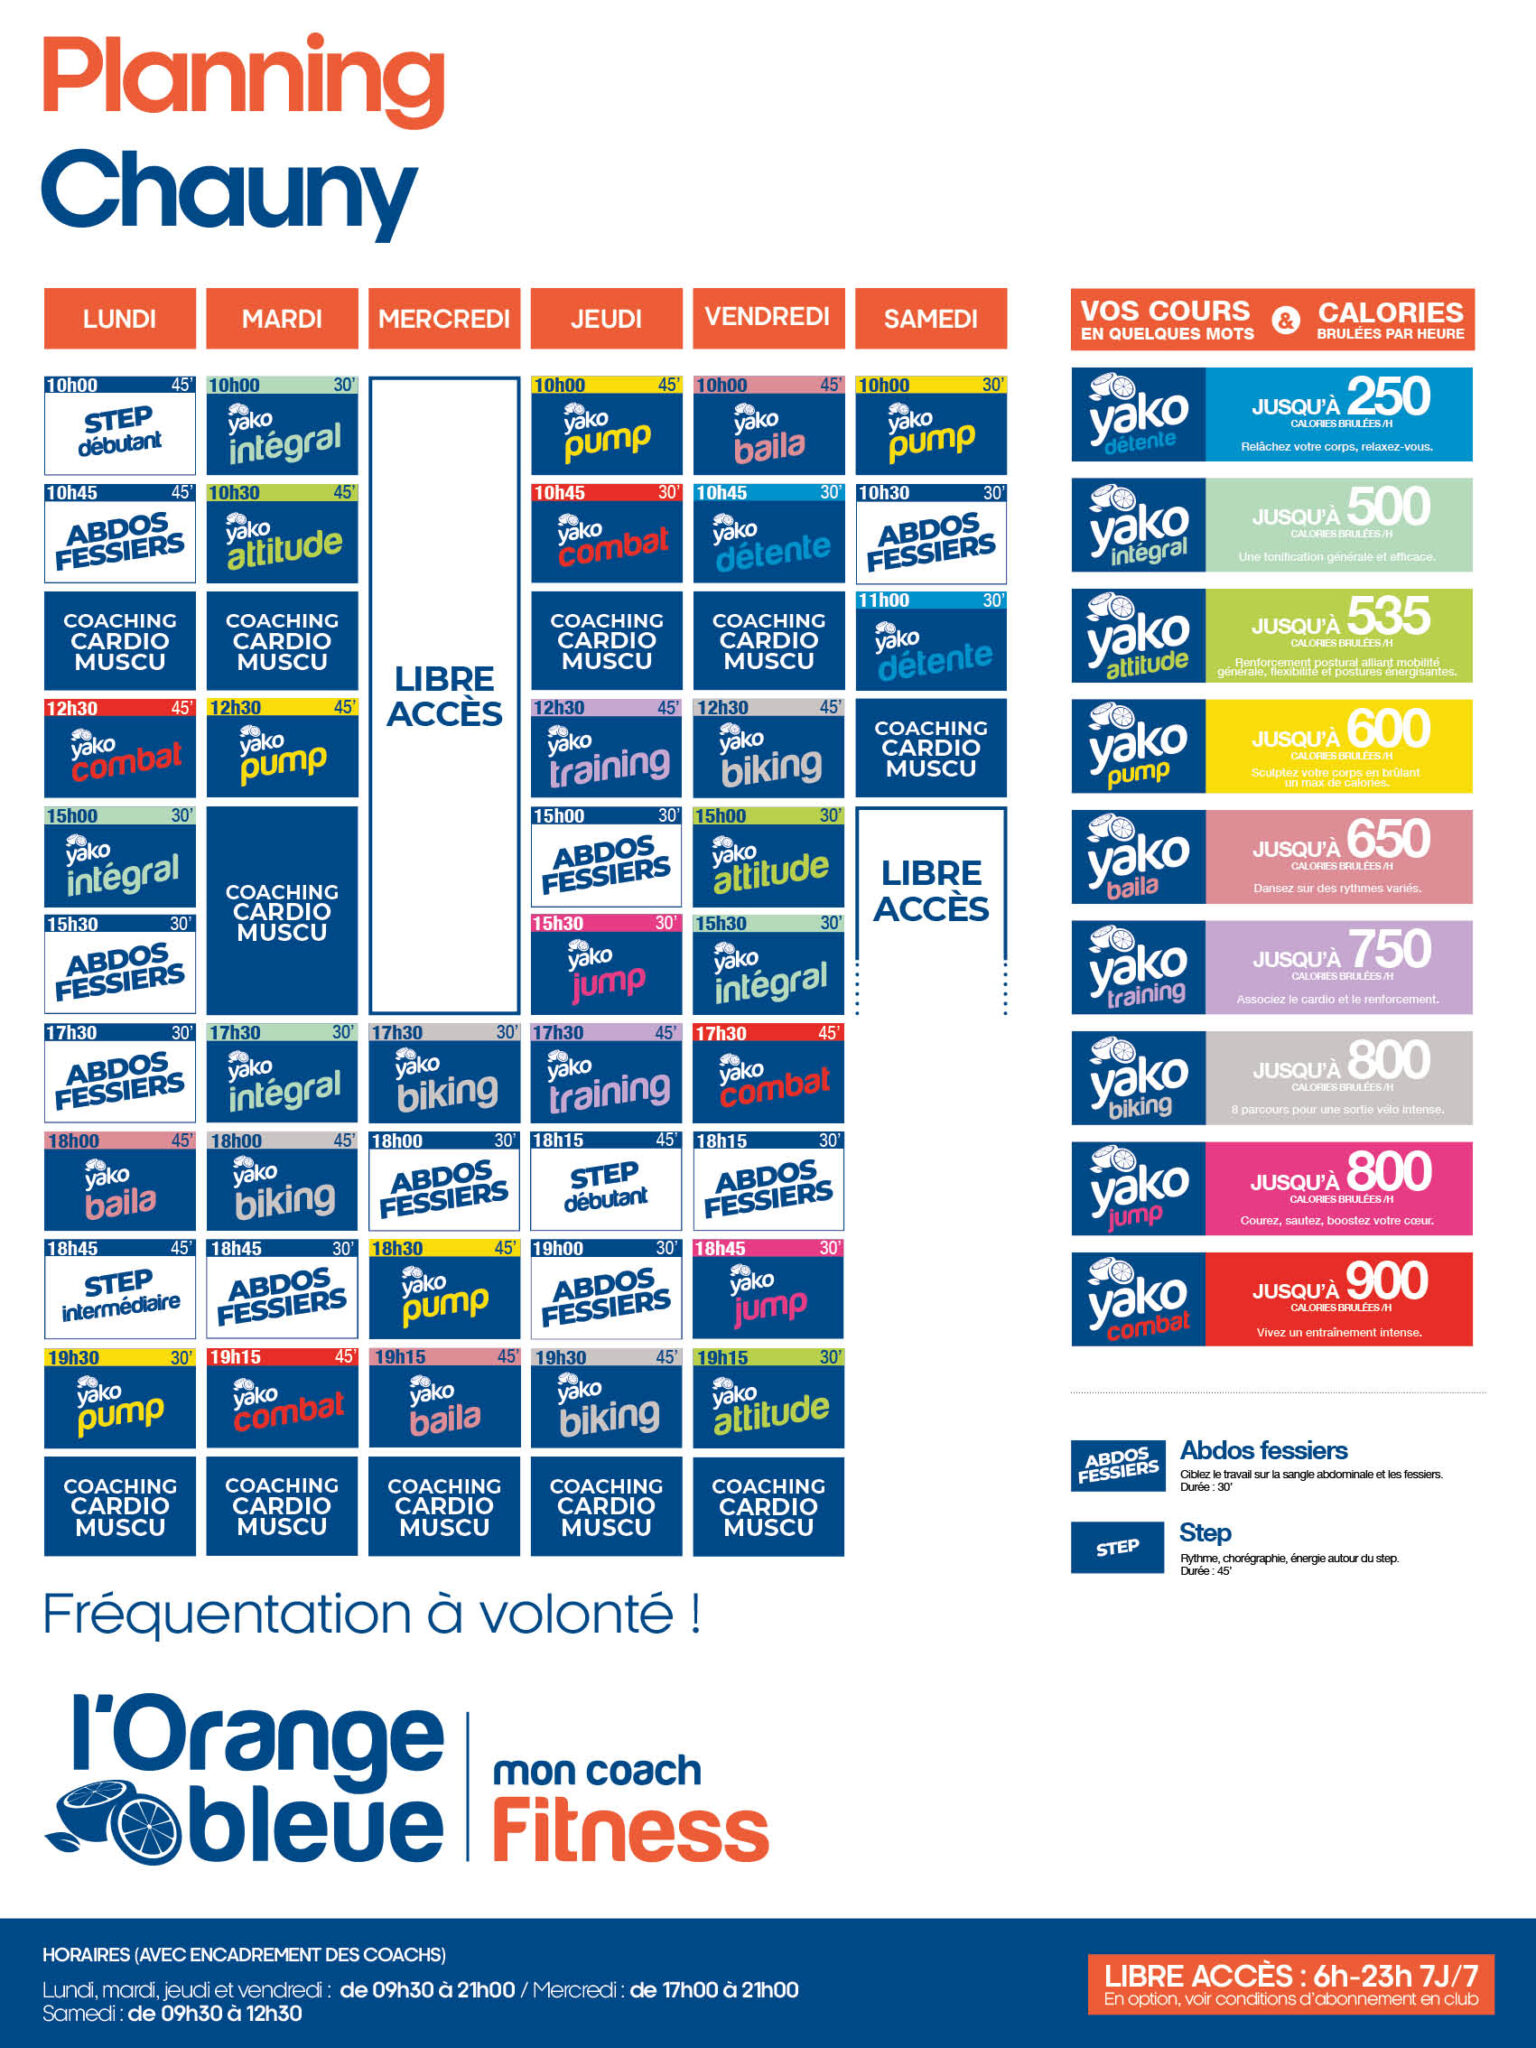 planning salle de sport l'Orange bleue Chauny